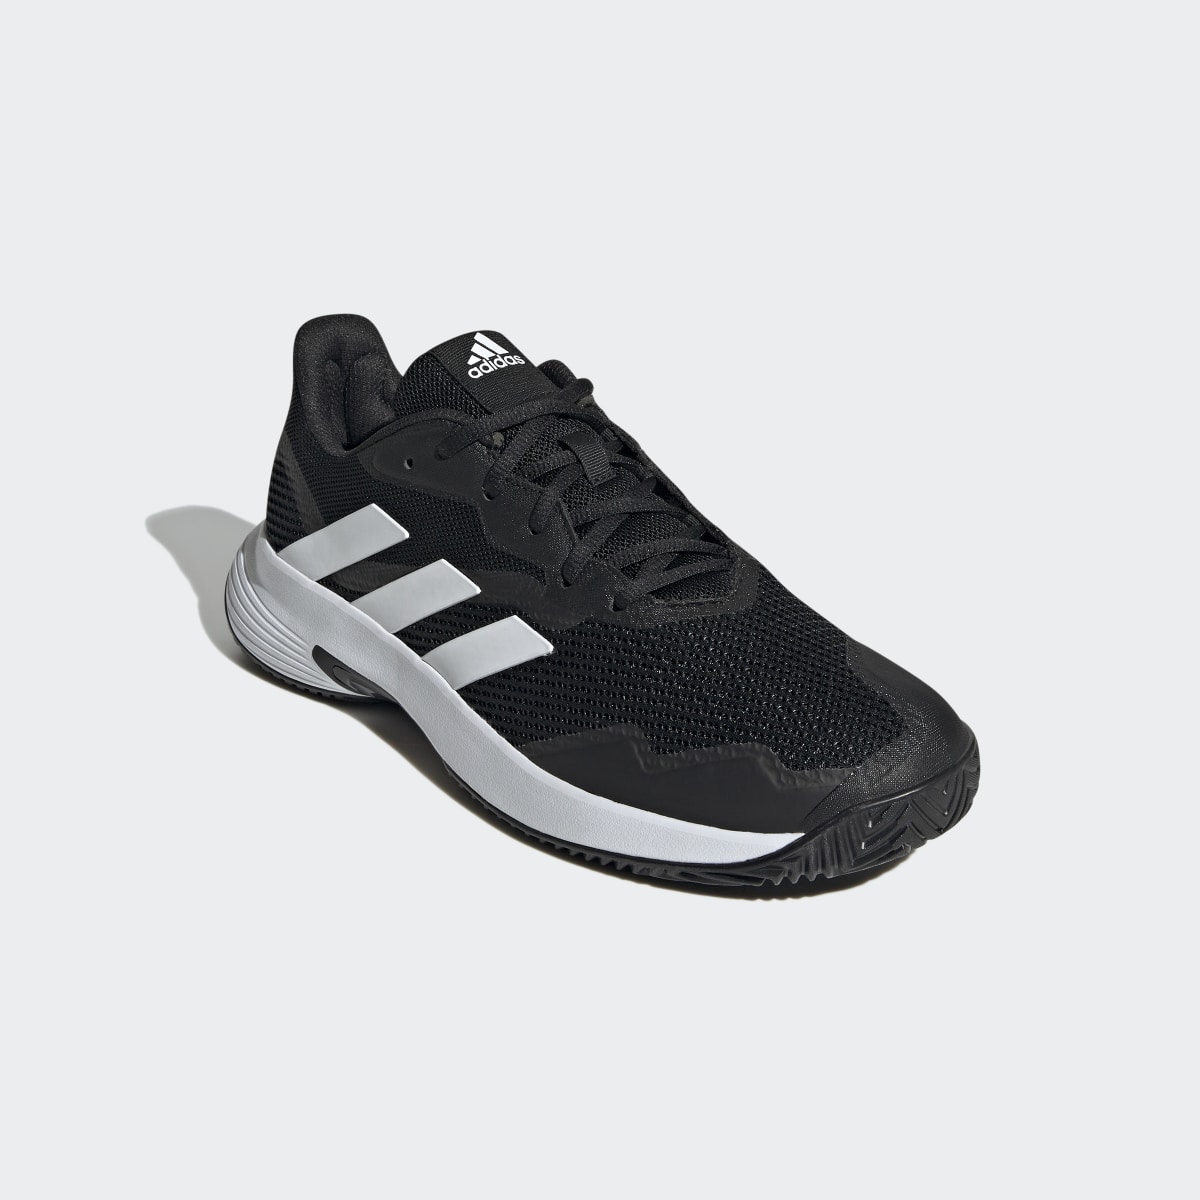 Adidas Courtjam Control Tennis Shoes. 5